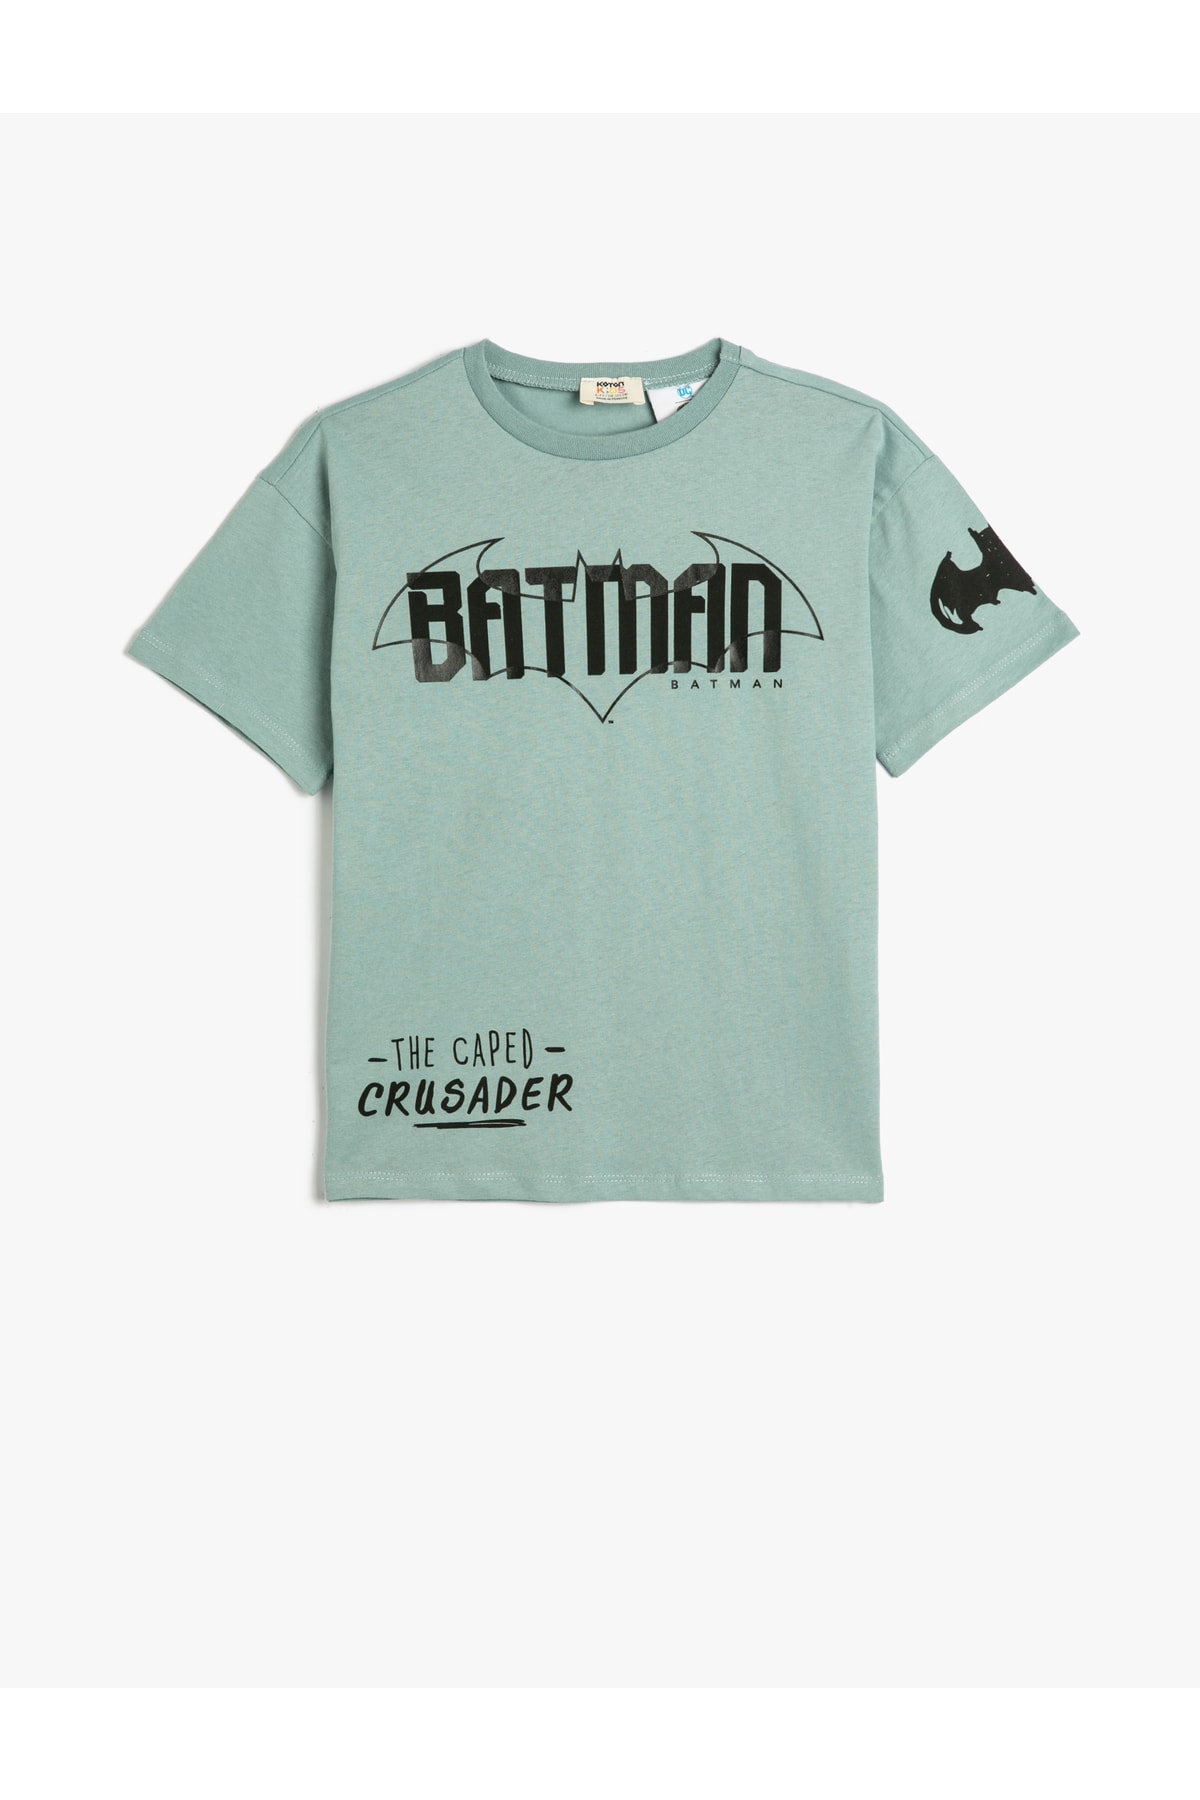 Koton Batman T-Shirt Licensed Short Sleeve Crew Neck Cotton